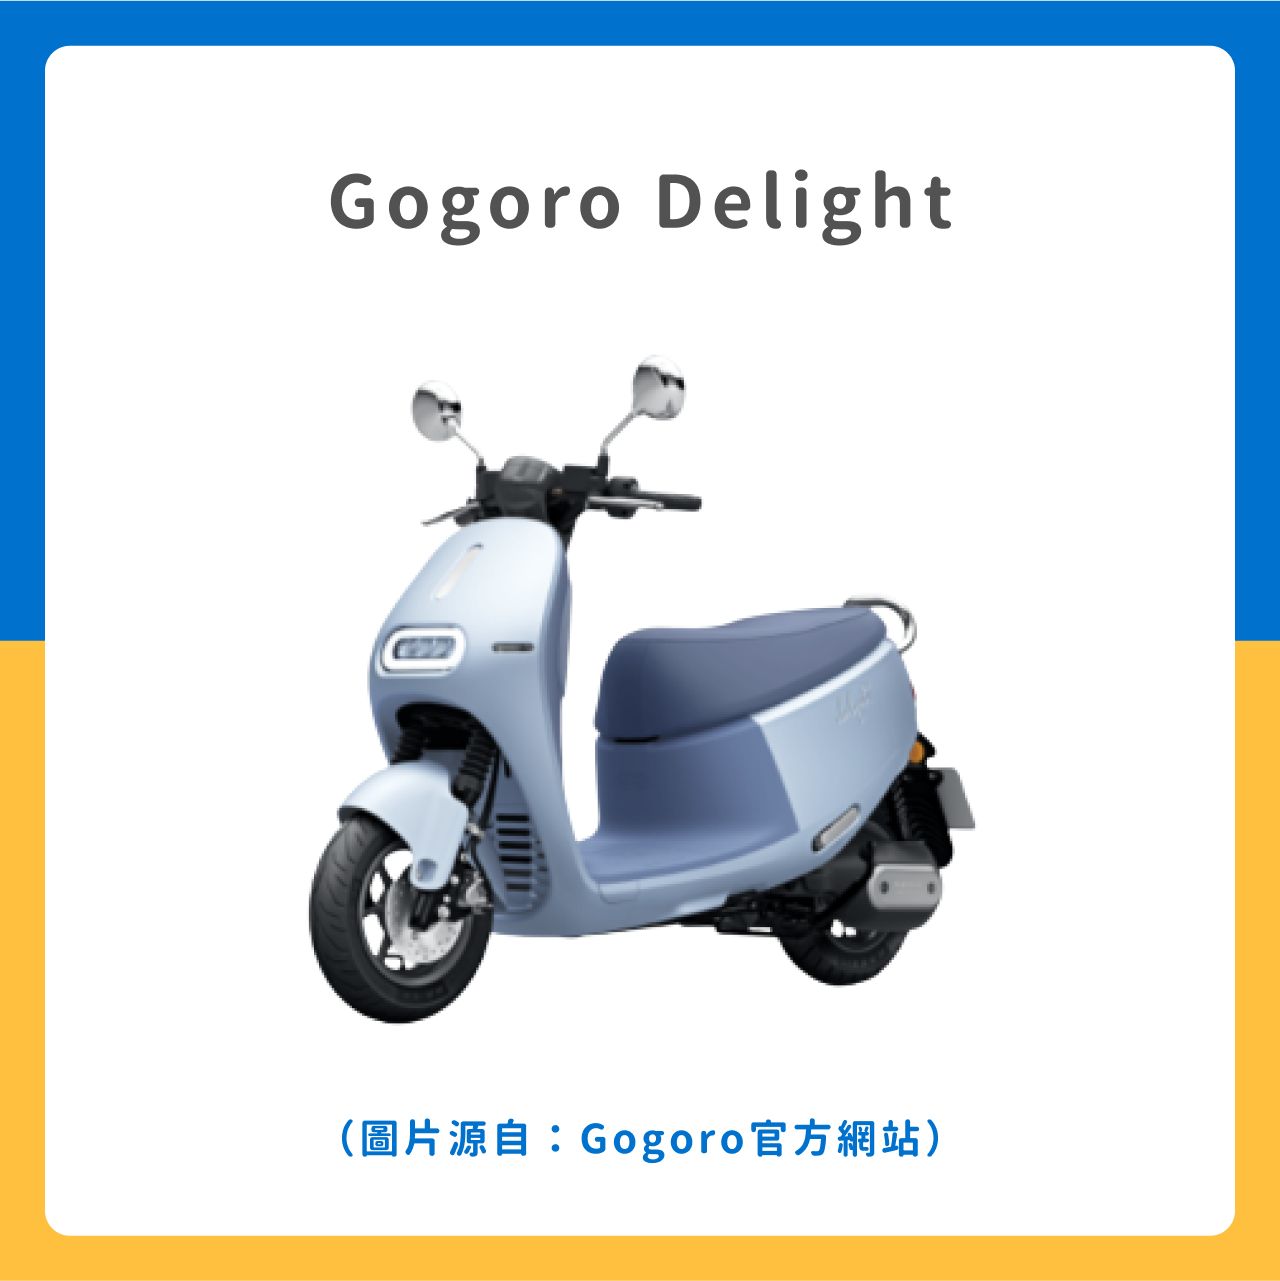 Gogoro Delight